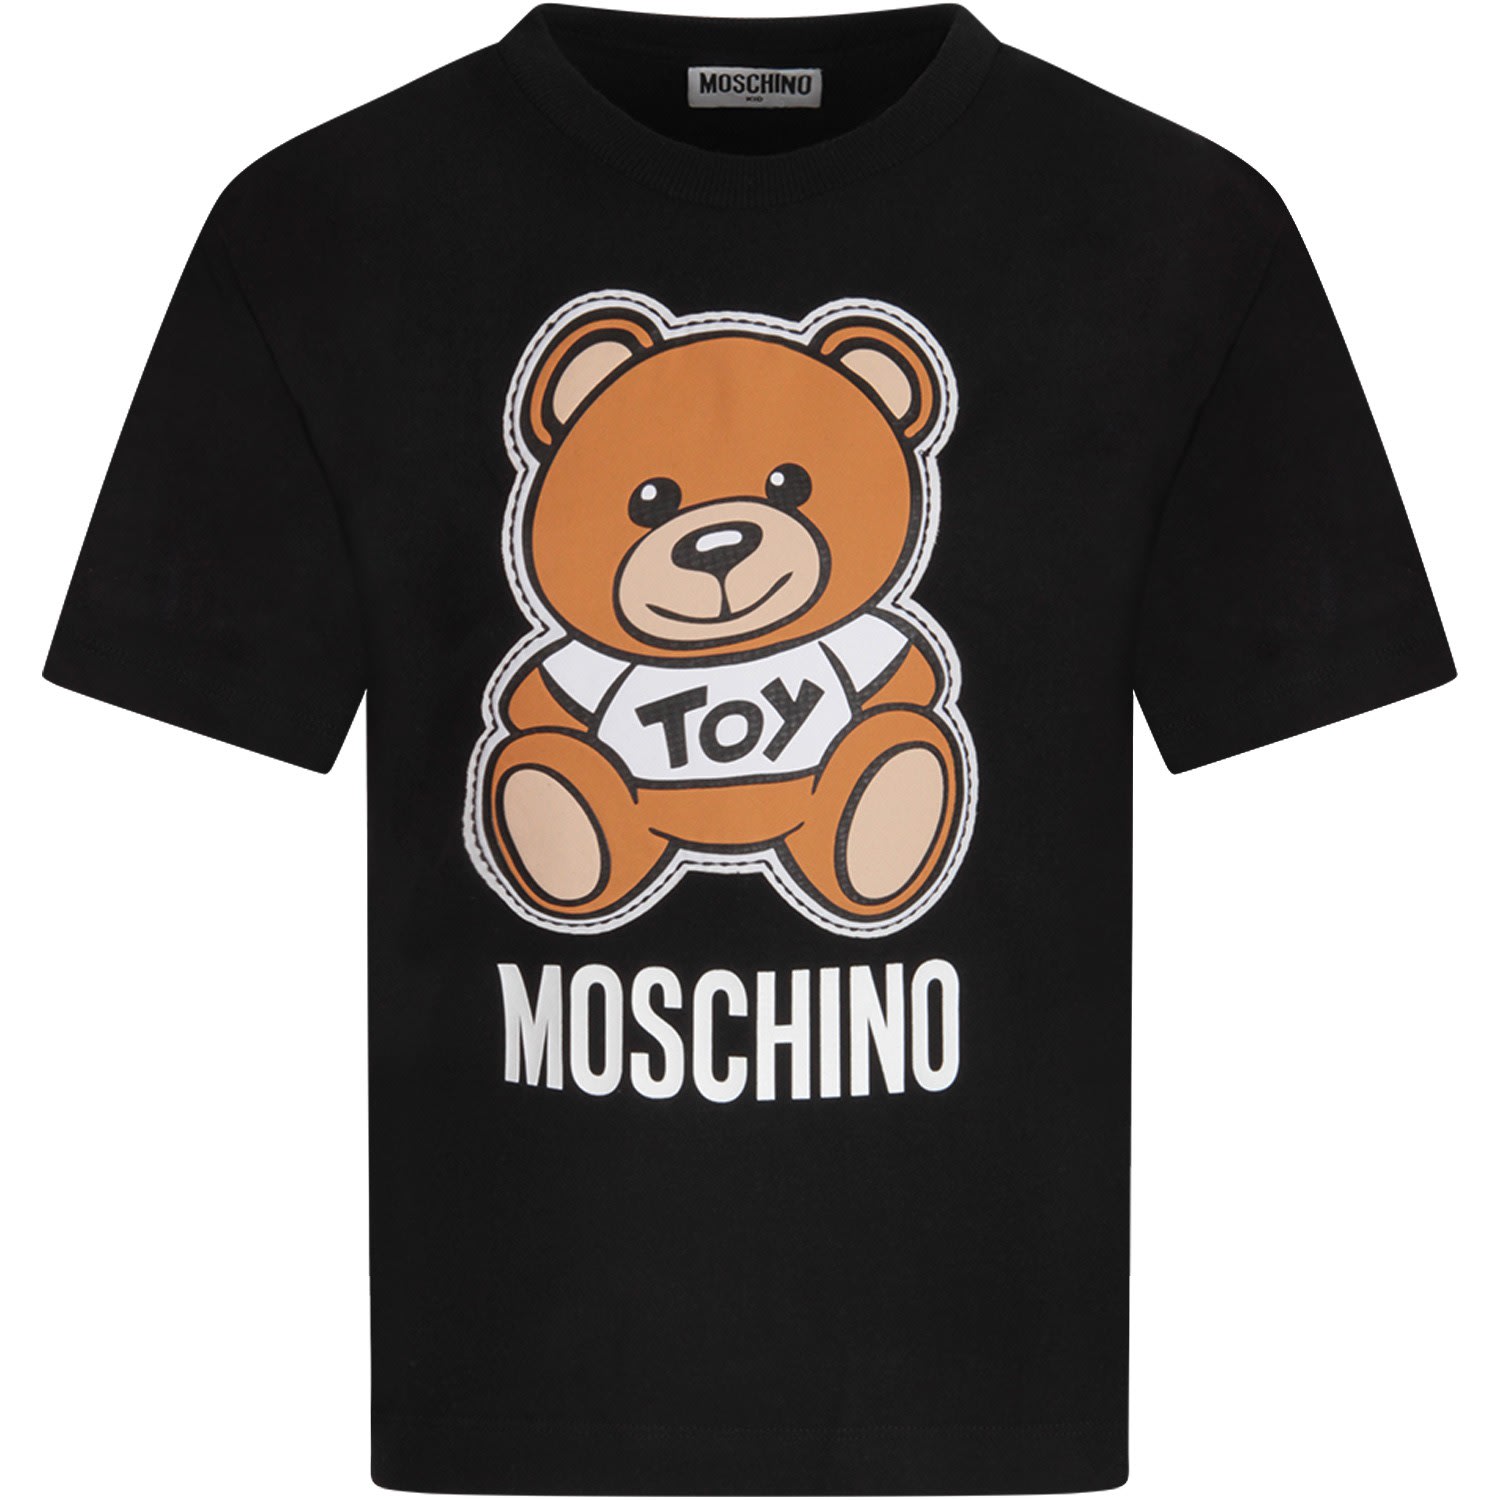 shirt with teddy bear on it